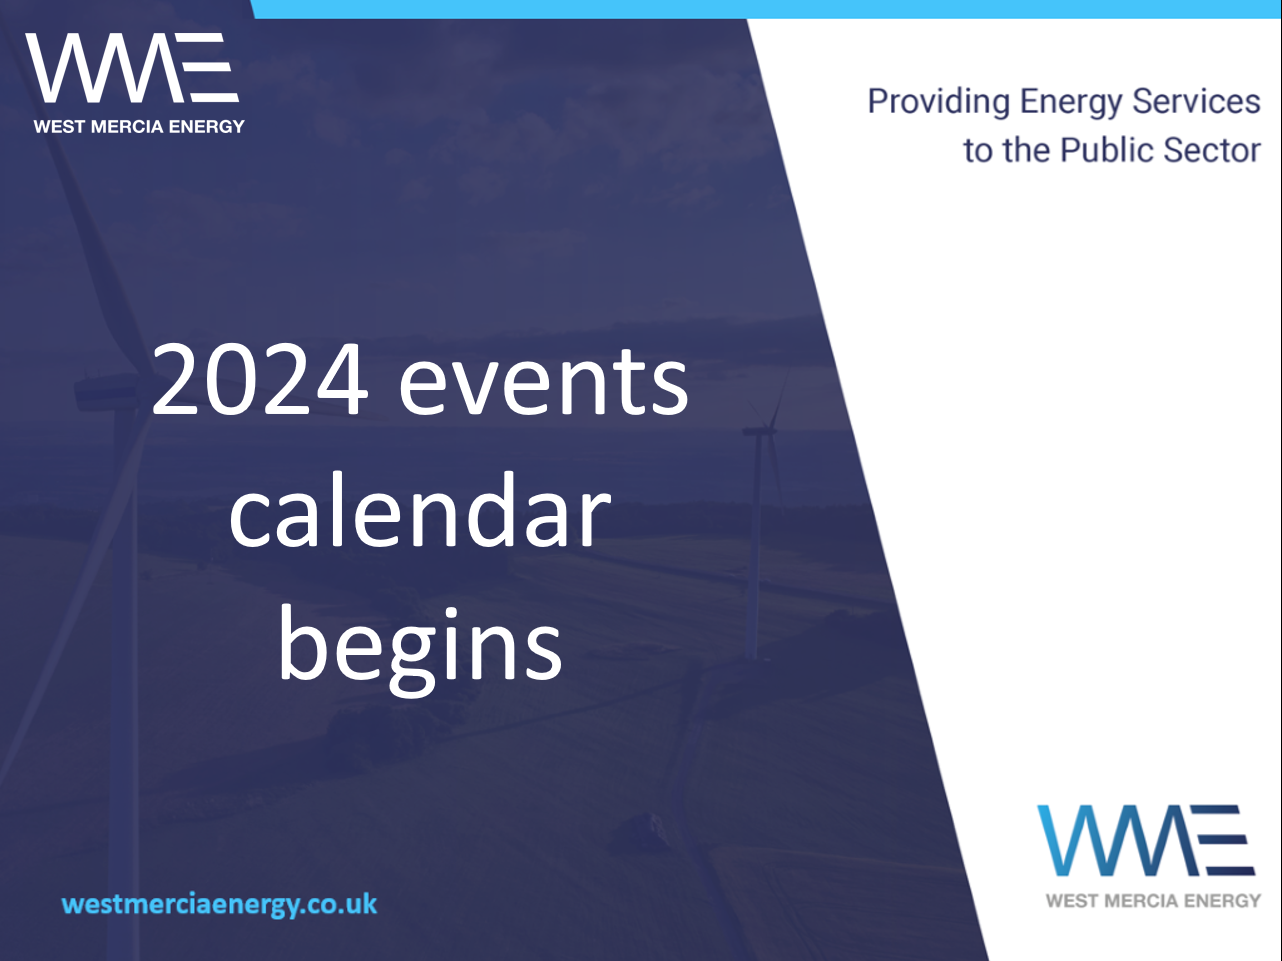 WME’s 2024 events calendar kicks off with a bang!